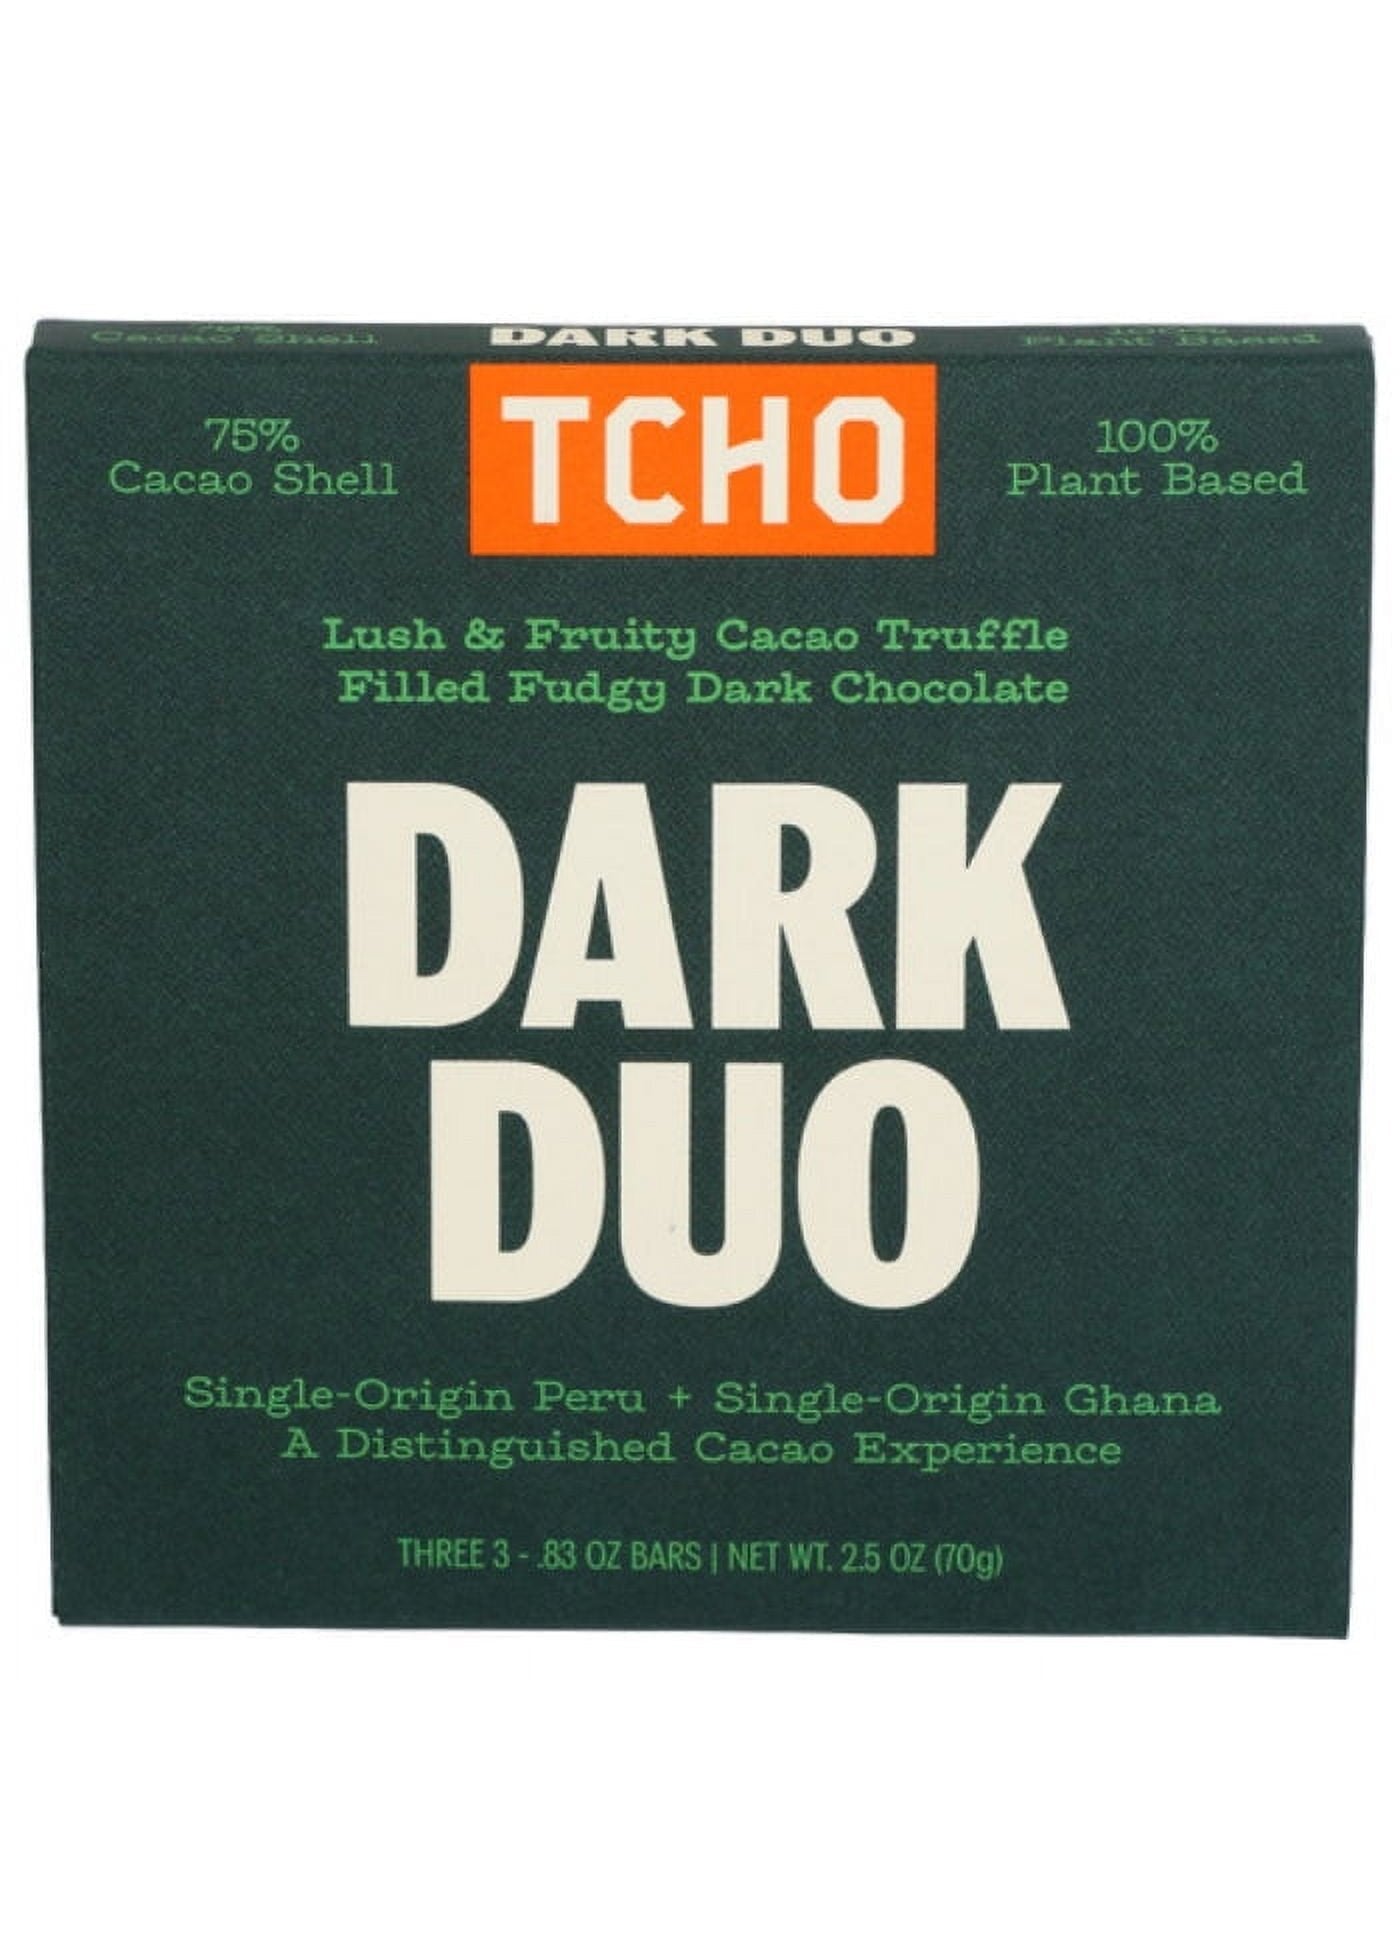 TCHO Dark Duo Chocolate bar